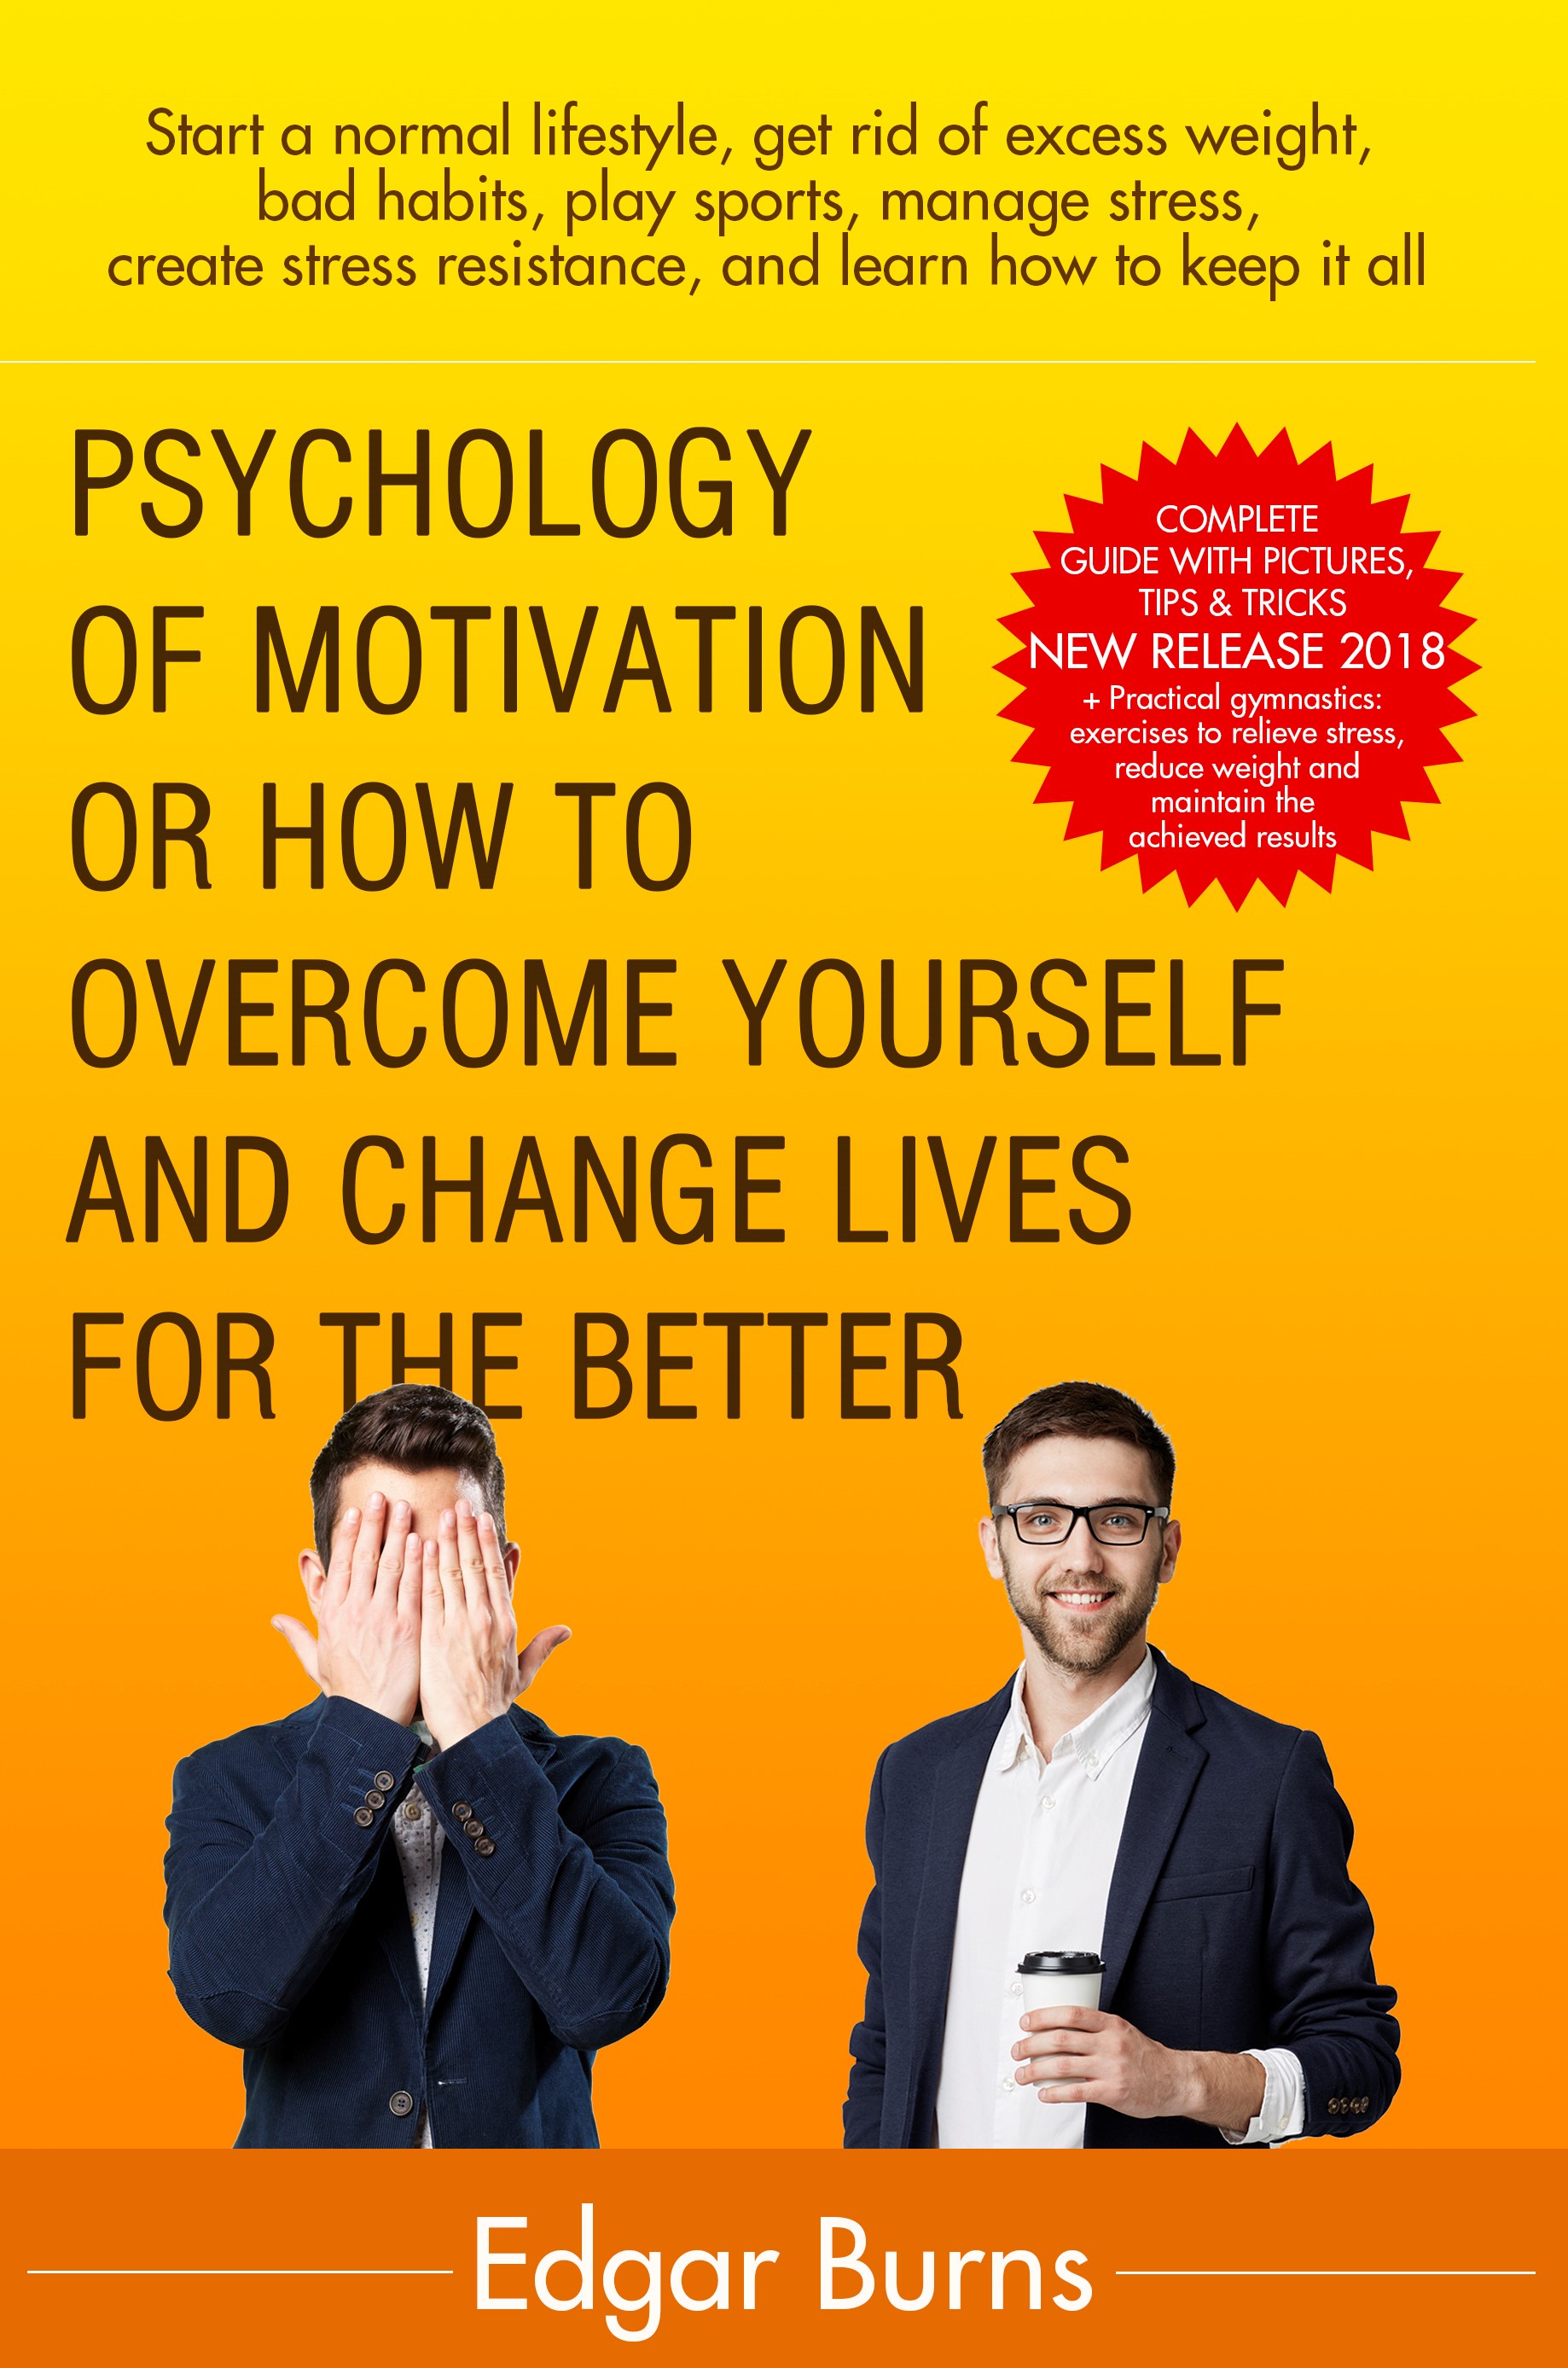 FREE: Psychology of motivation by Edgar Burns